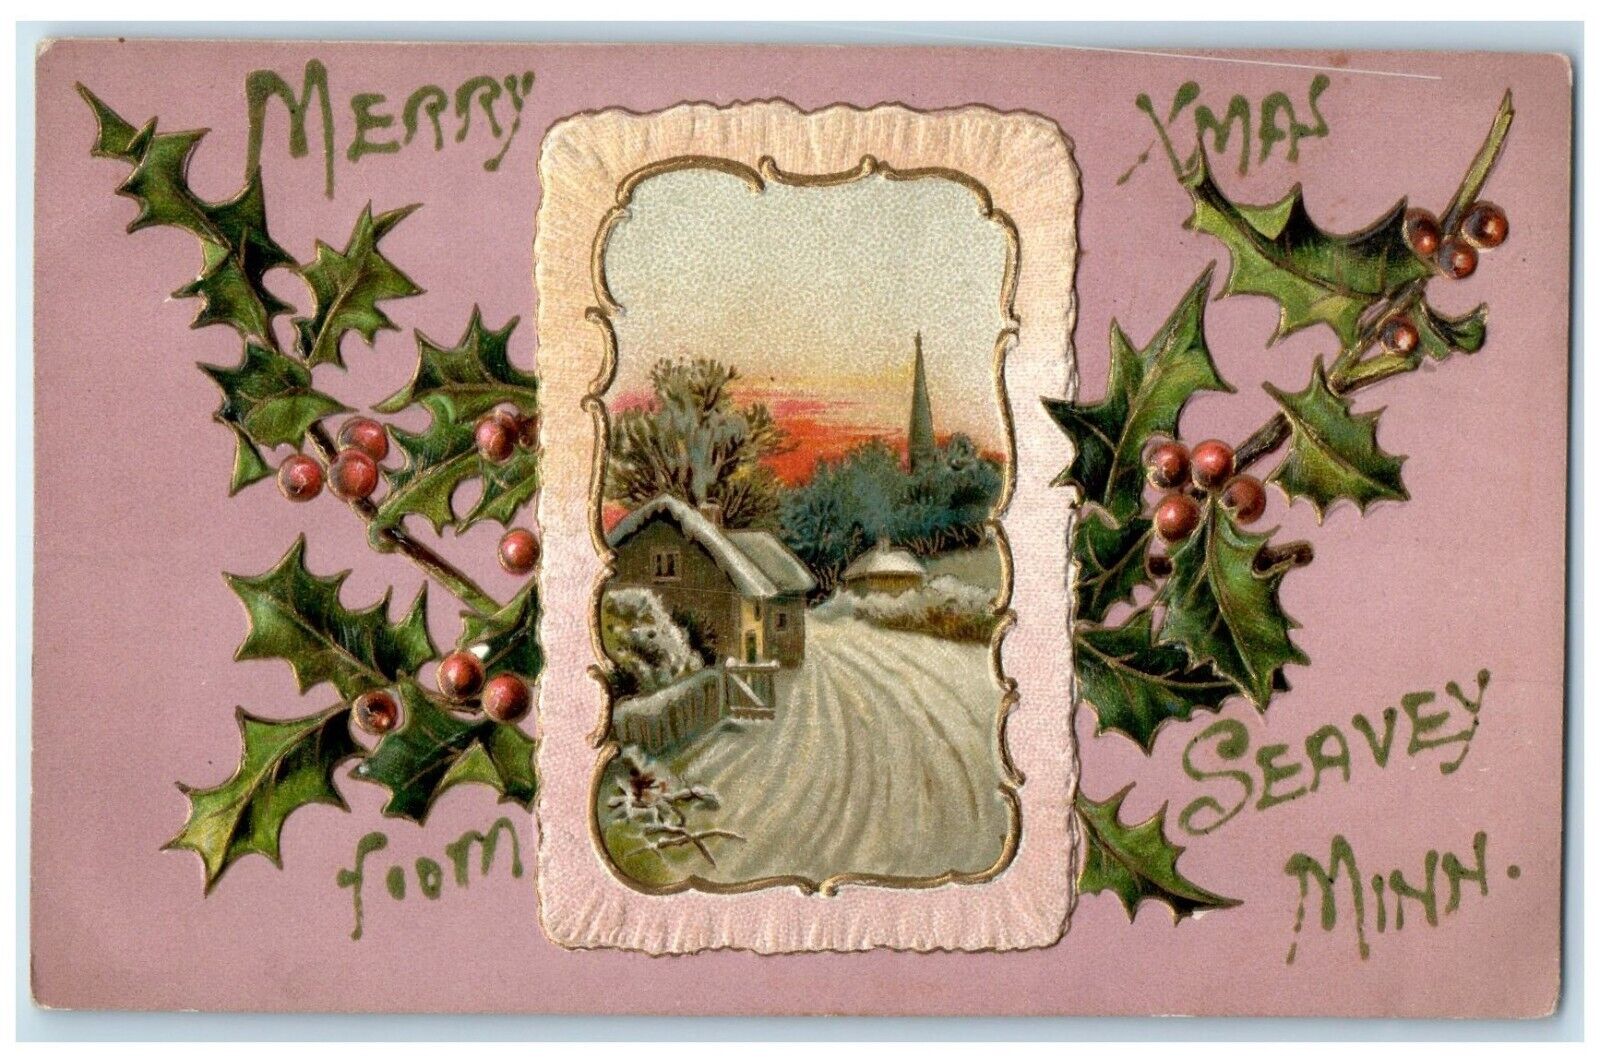 c1910 Merry Xmas From Seavey Minnesota Embossed Glitter Vintage Antique Postcard